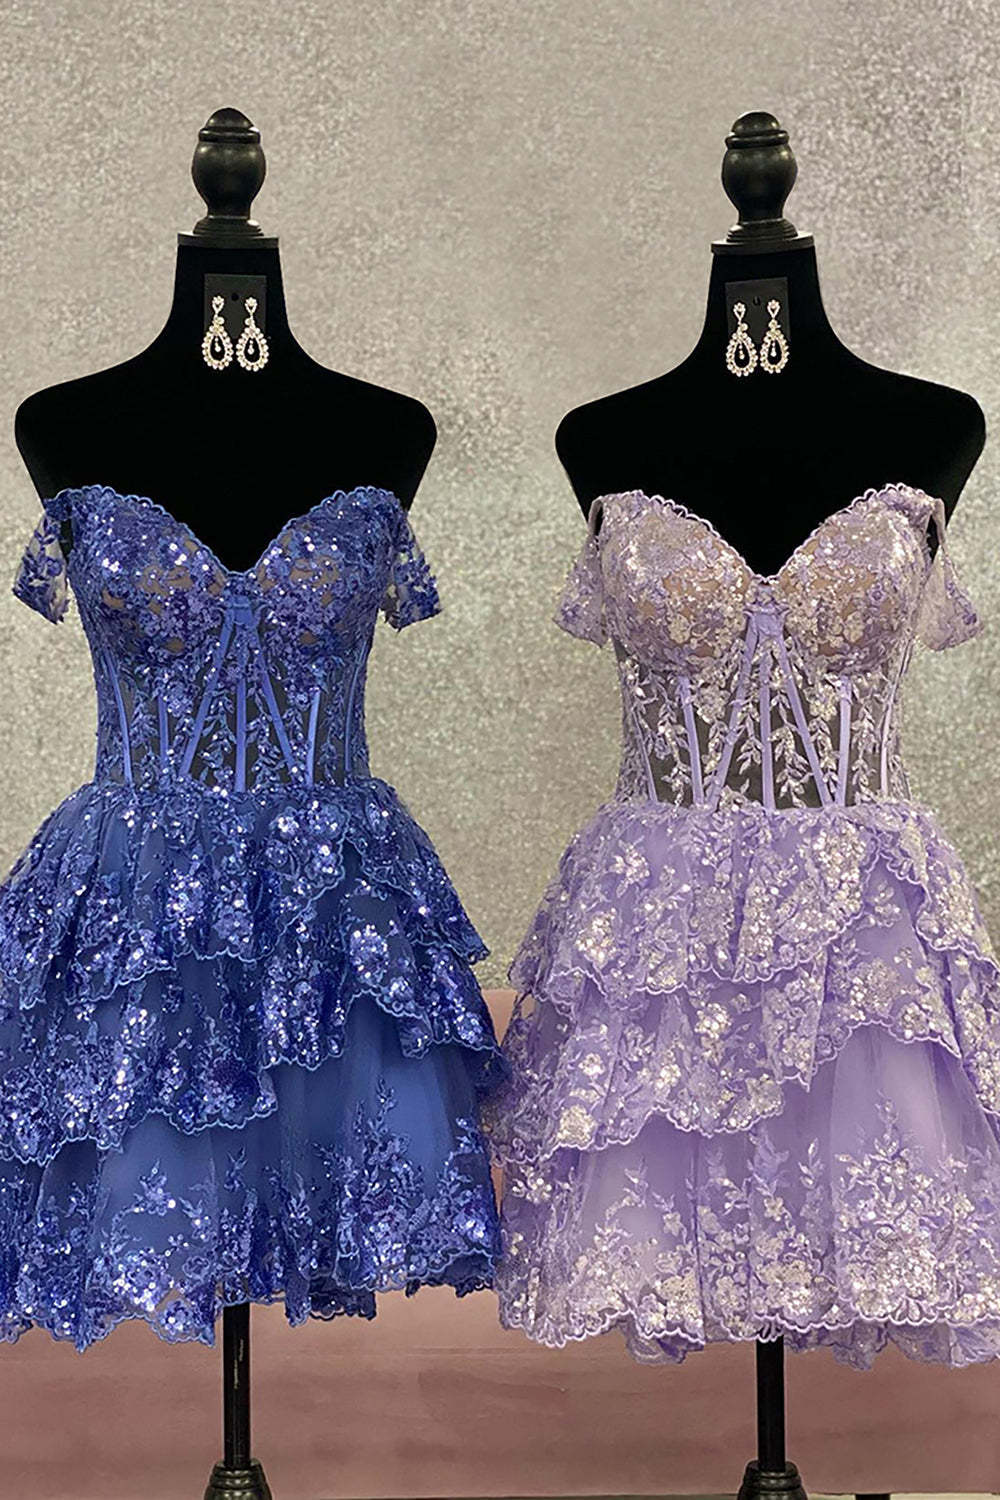 Glitter Blue Asymmetrical A-Line Short Lace Homecoming Dress